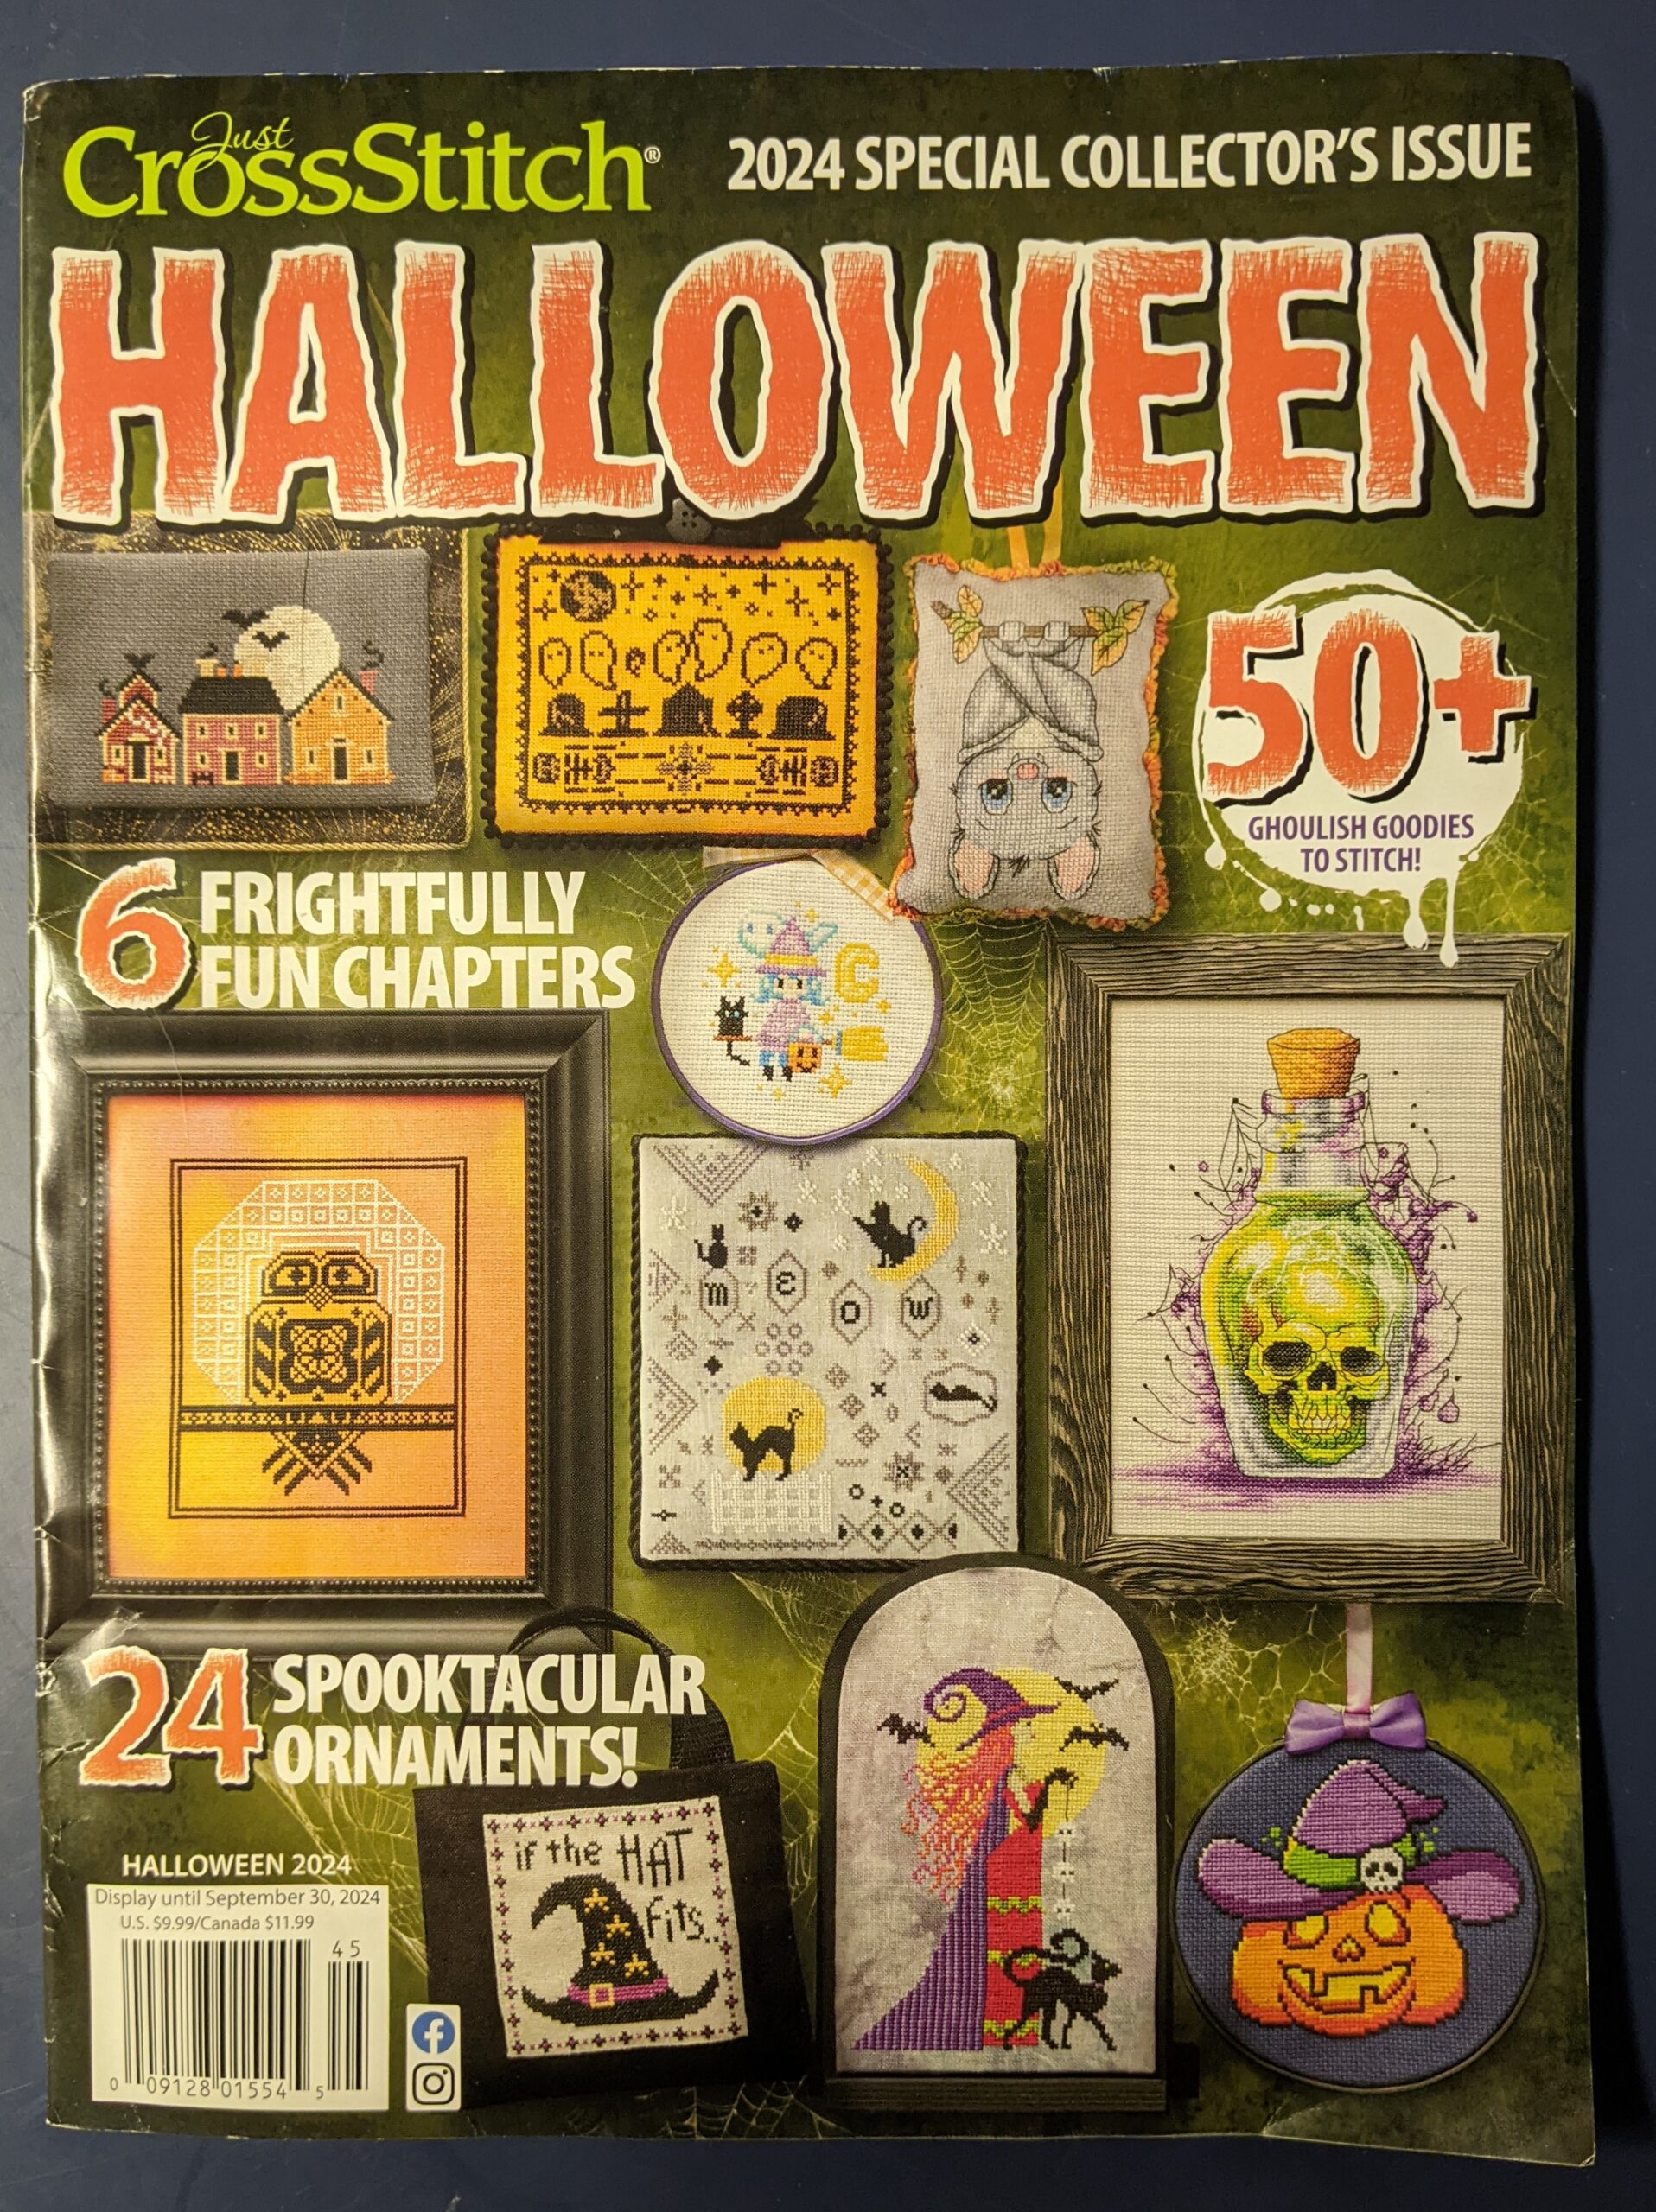 Just Cross Stitch Halloween Issue 2024